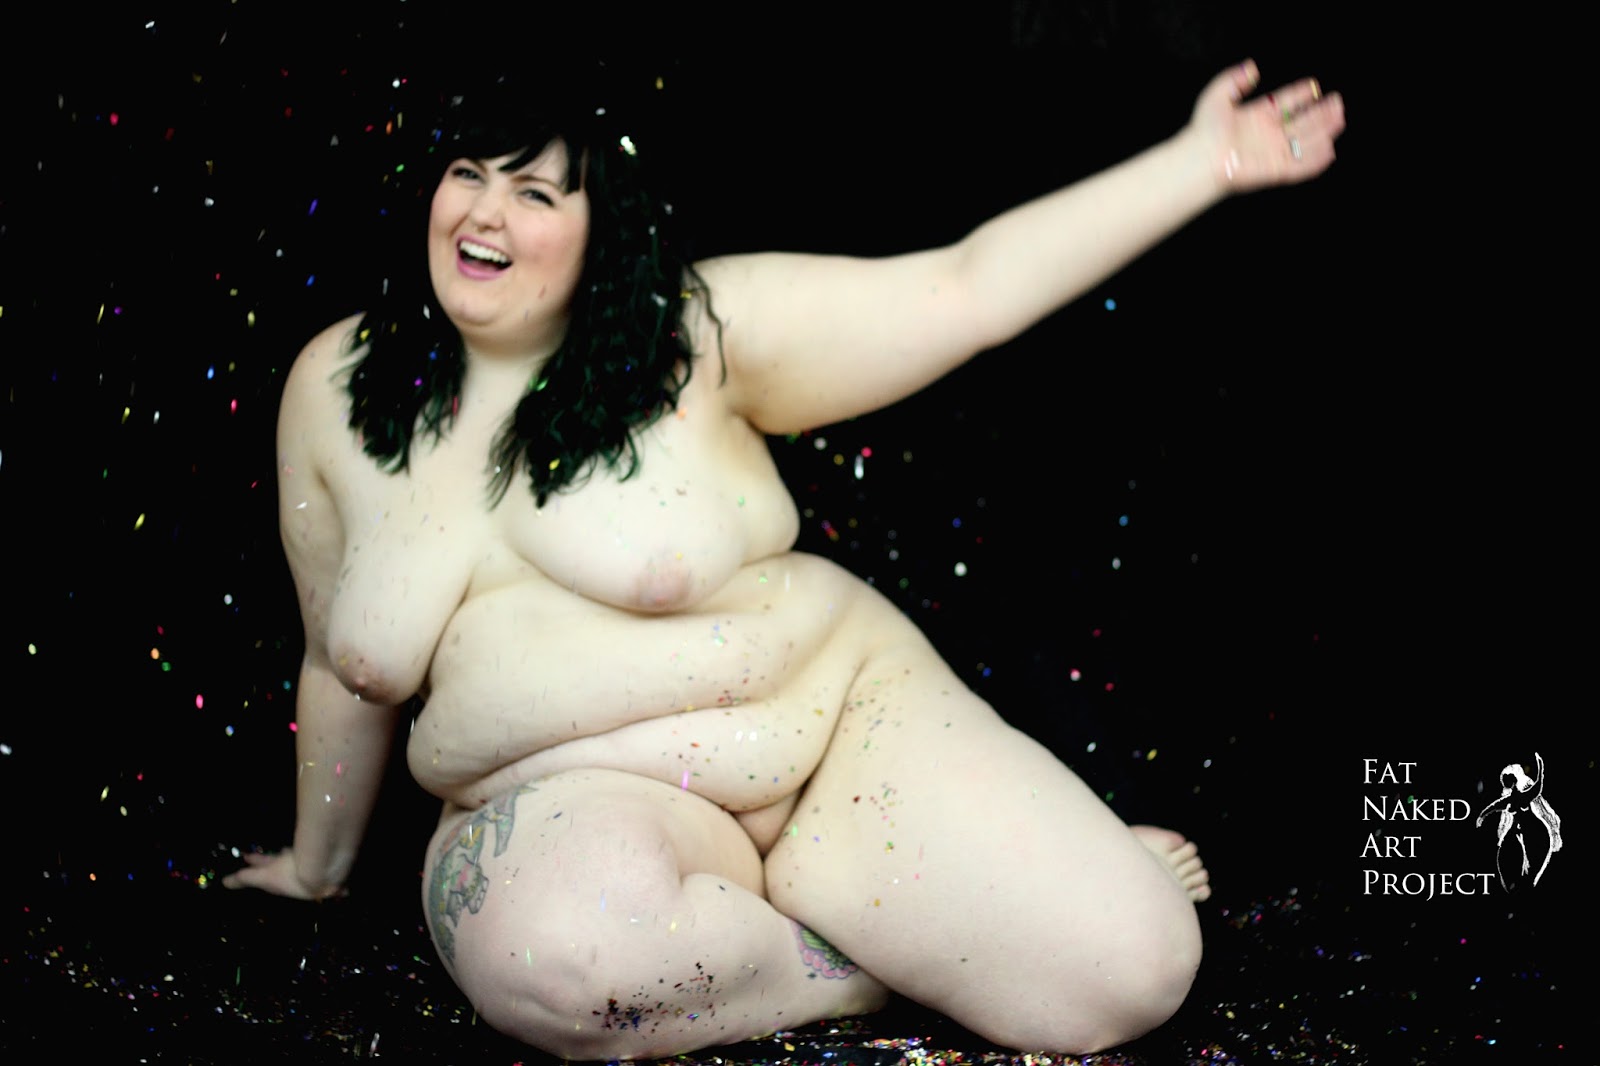 Fat Naked Art Project - The Fat Naked Art Project | CLOUDY GIRL PICS